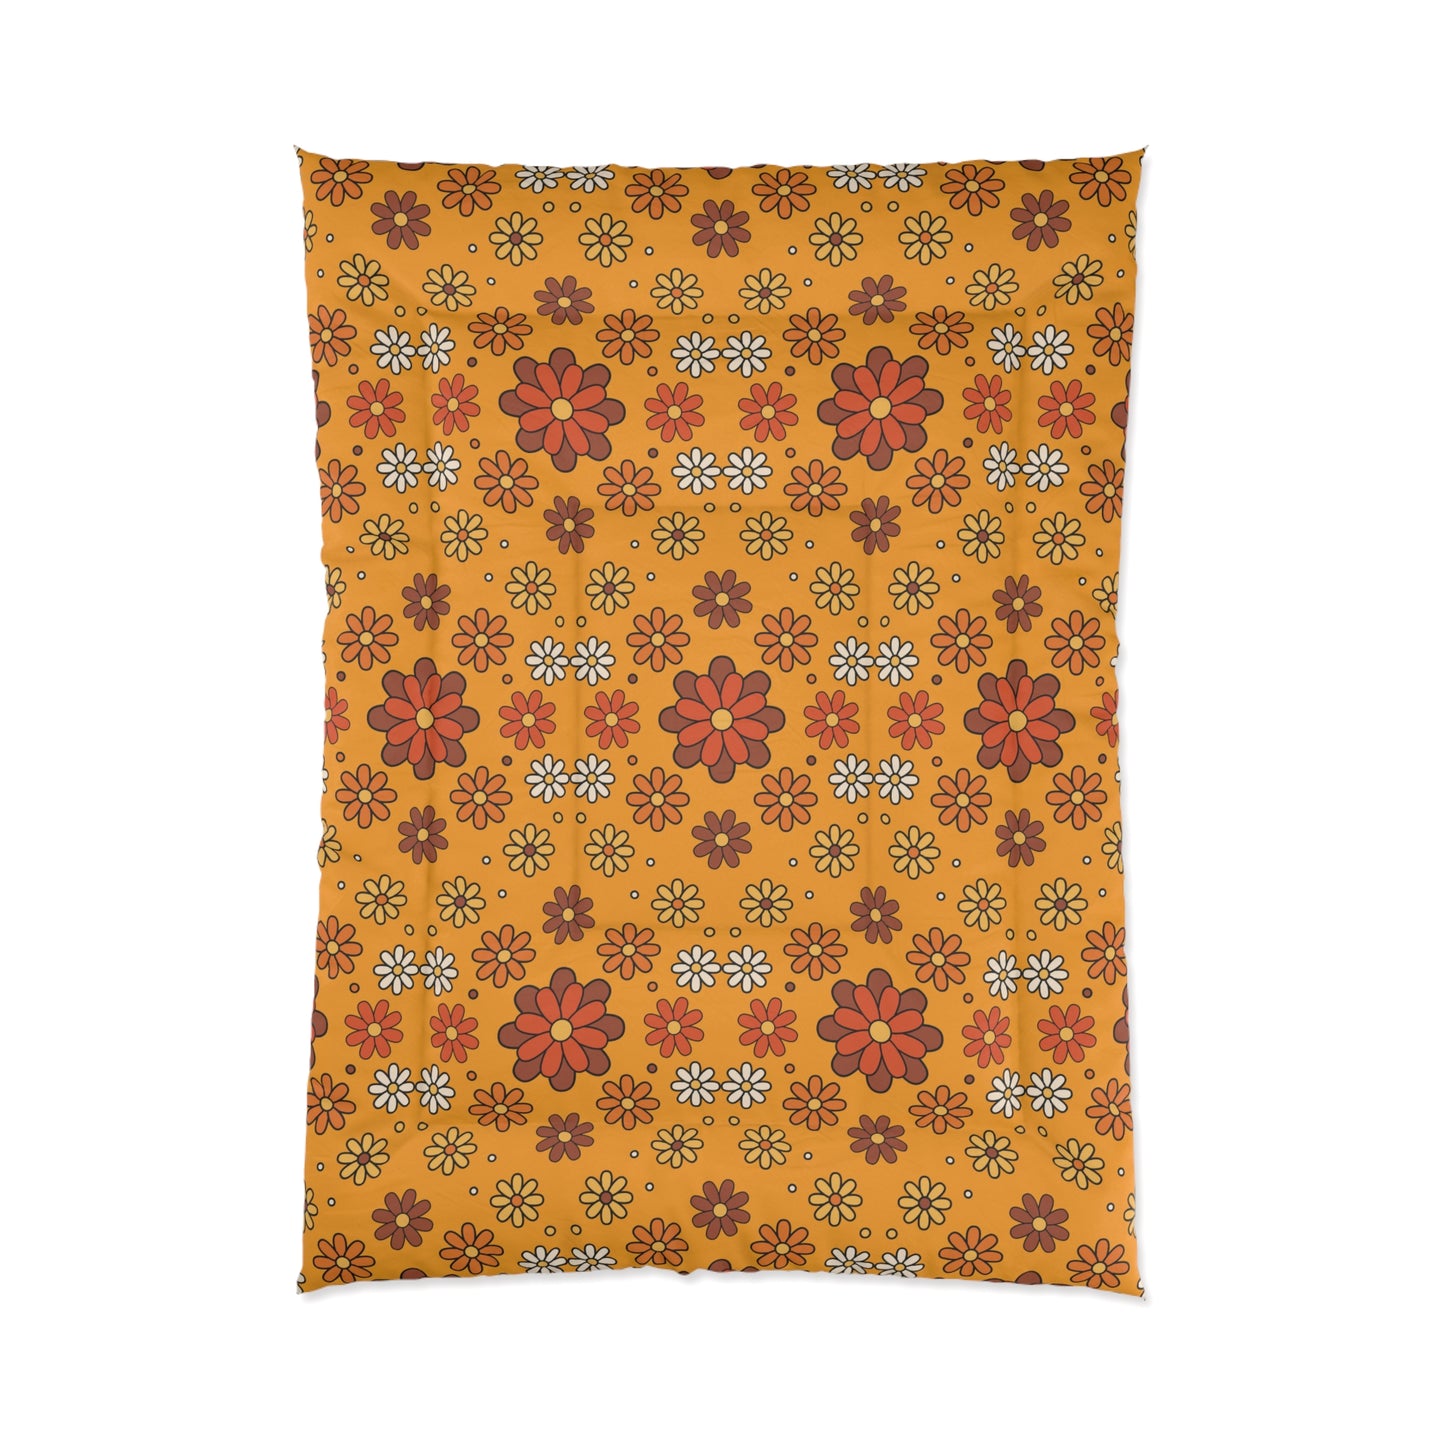 Retro 60s 70s Groovy Mod Daisy Floral Mid Century Orange & Brown Comforter